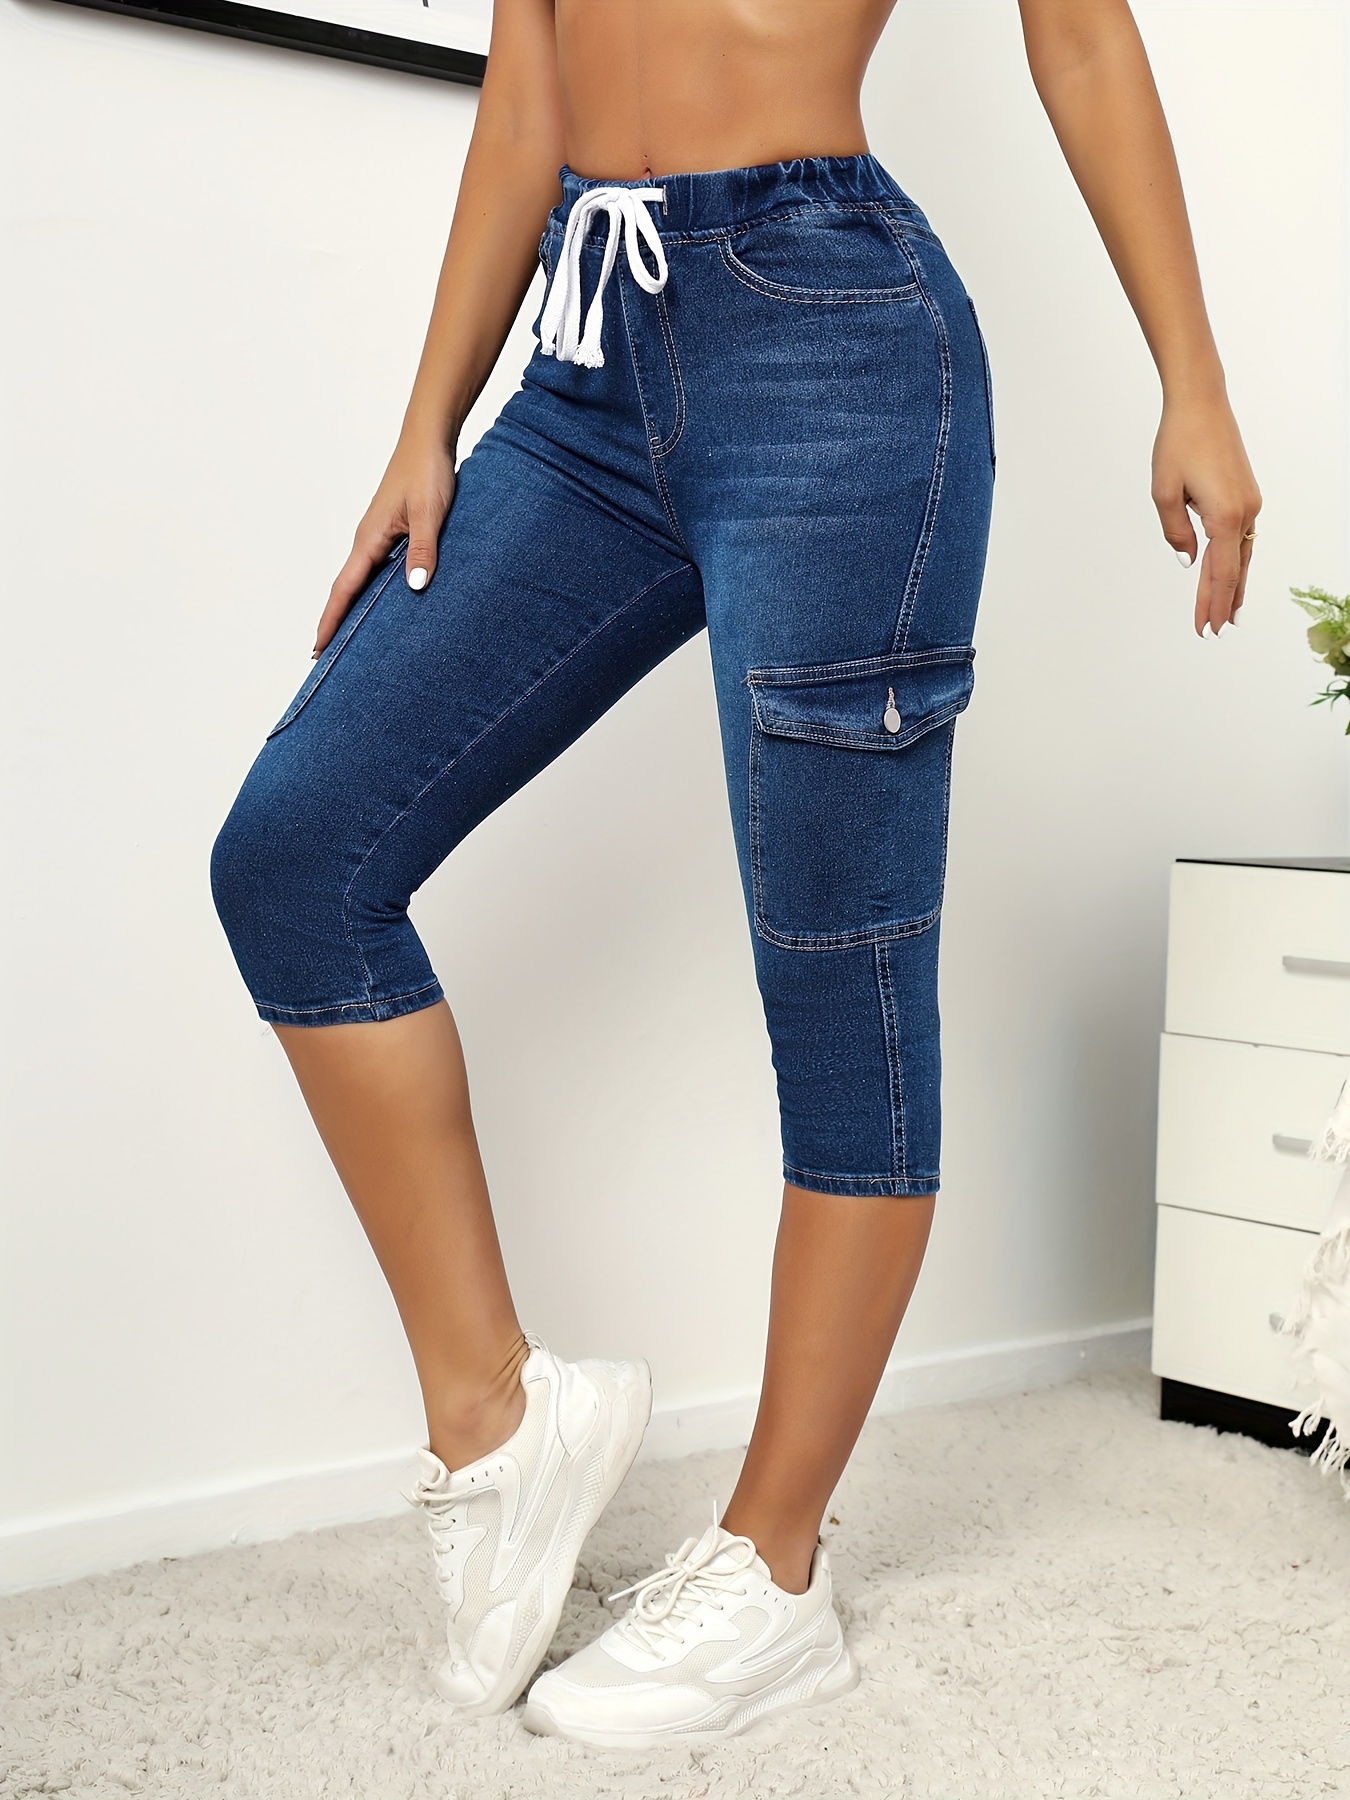 Slim jeans stretch skinny capri pants elastic drawstring denim